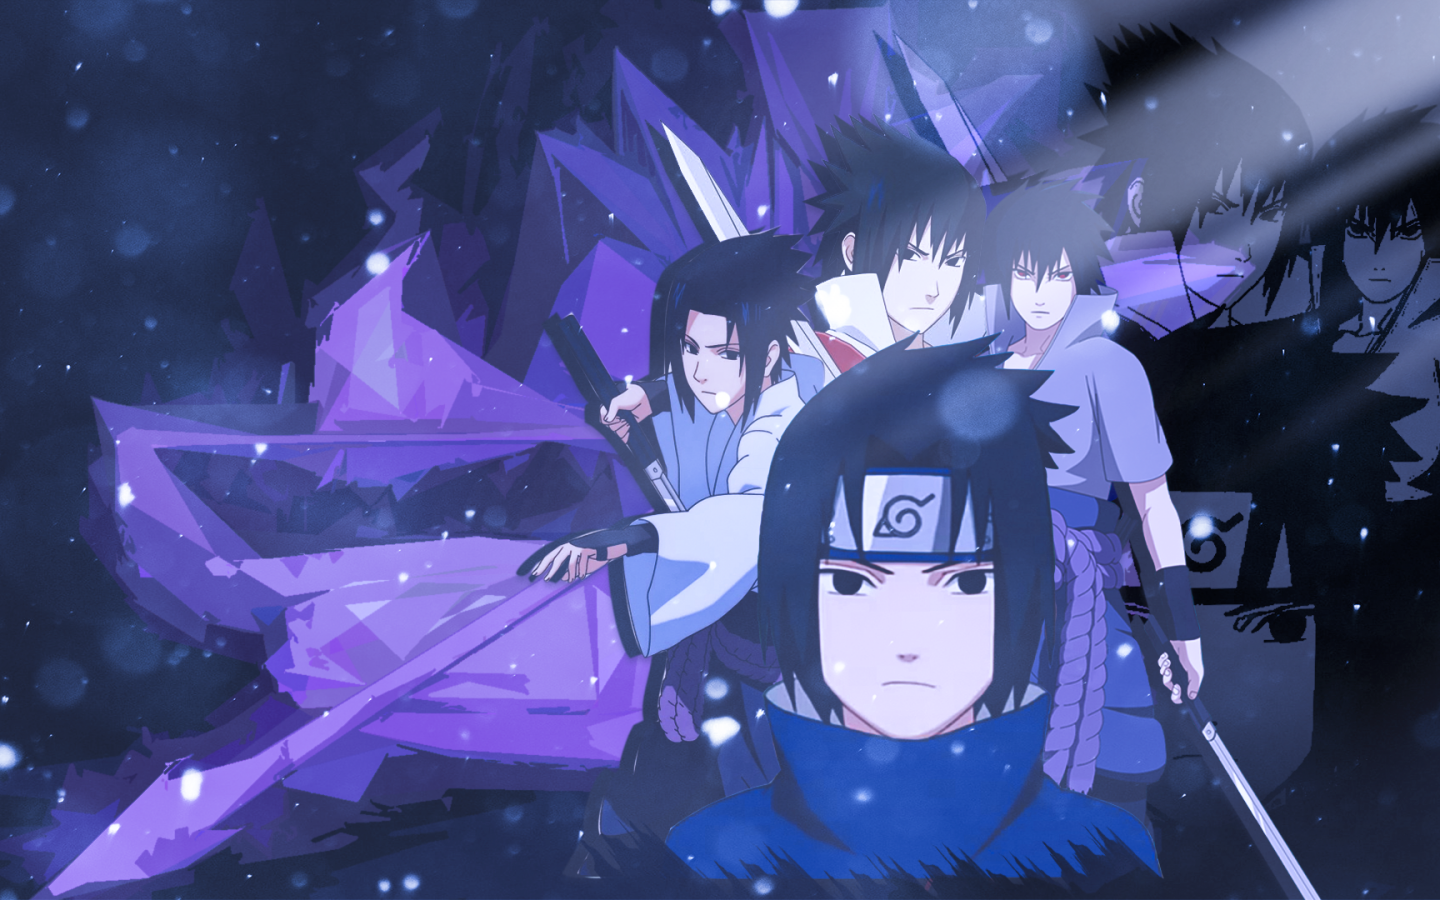 Download 1440x900 Wallpaper Uchiha Sasuke, Naruto Shippuden, Anime,  Widescreen 16:10, Widescreen, 1440x900 Hd Image, Background, 7521